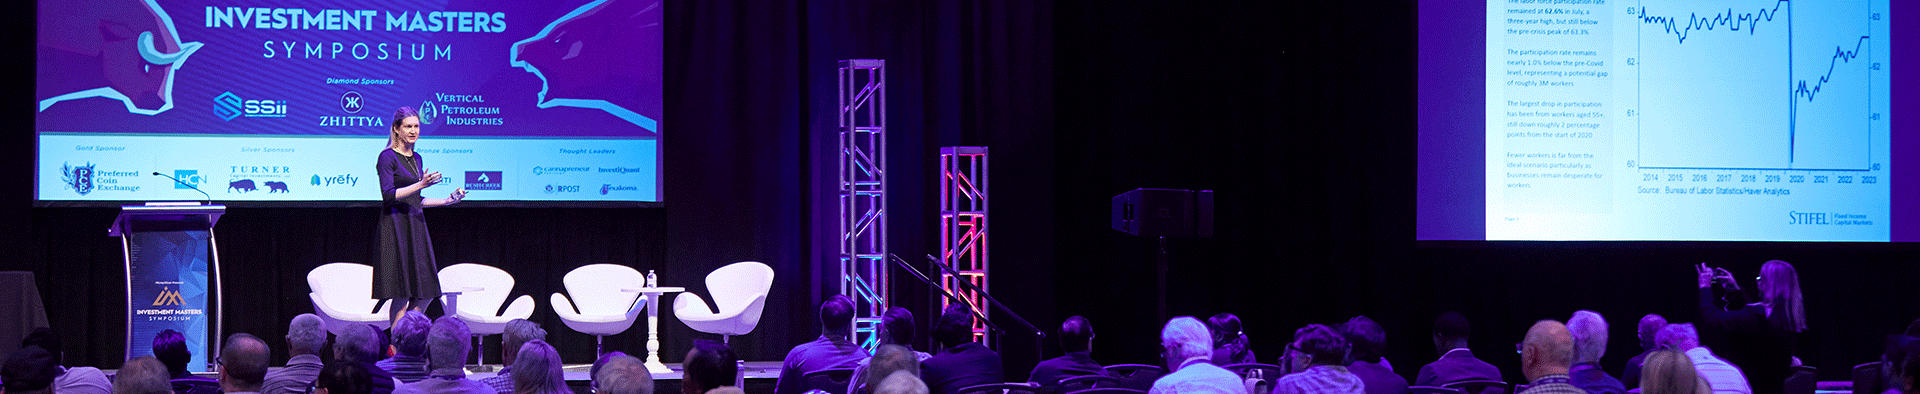 Image of keynote speakers on the stage